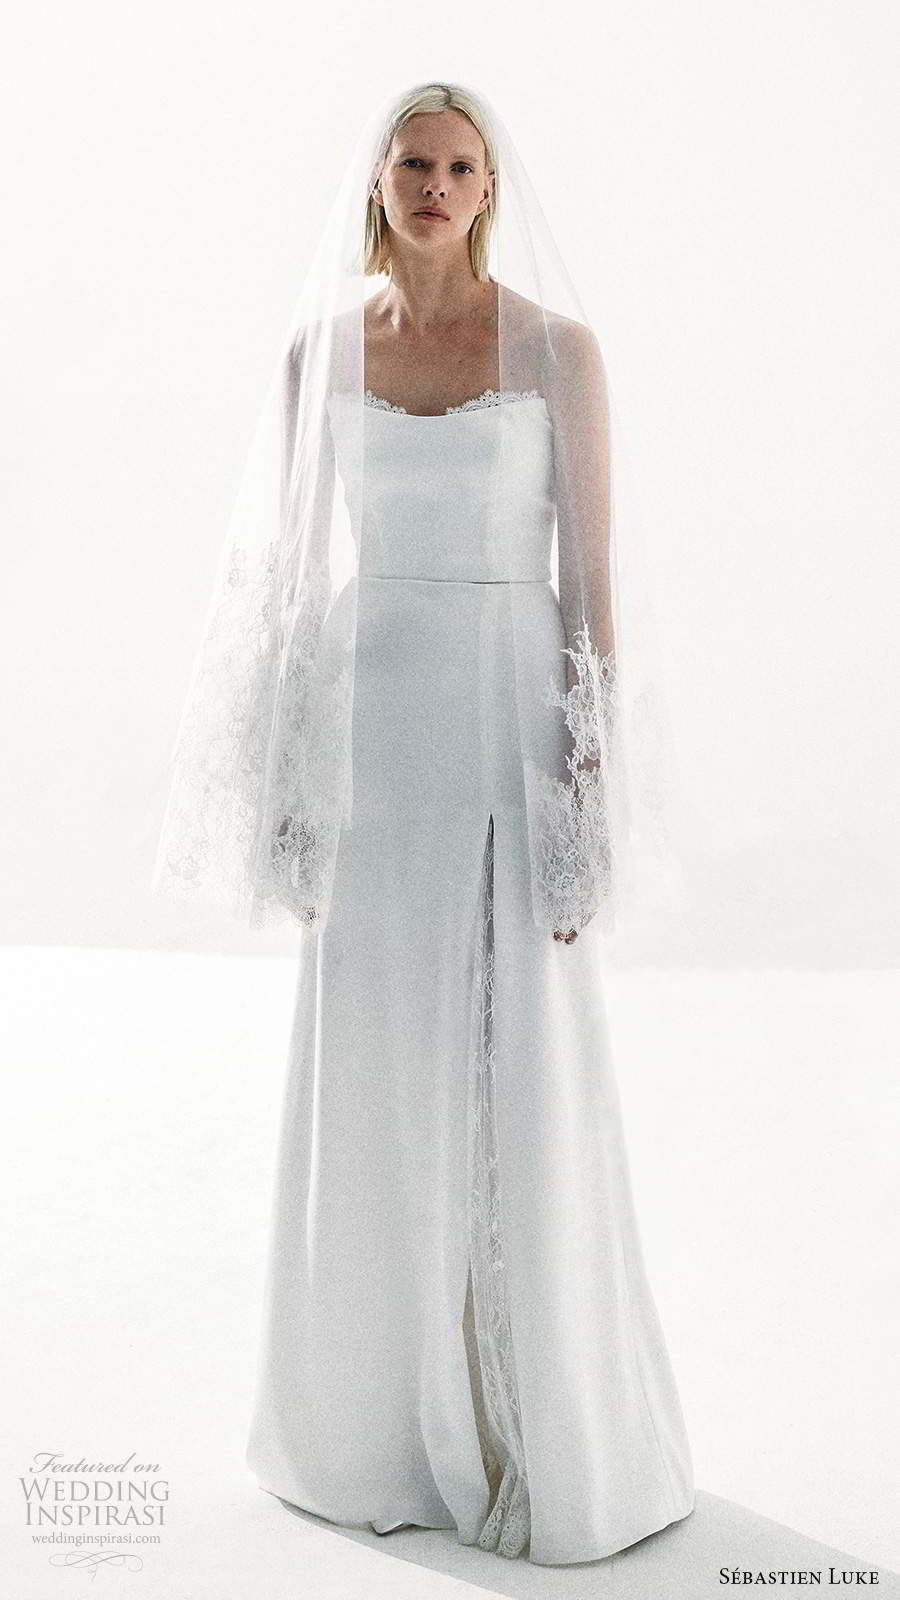 sebastien luke fall 2020 bridal strapless semi sweetheart neckline clean minimalist a line wedding dress slit skirt (7) mv